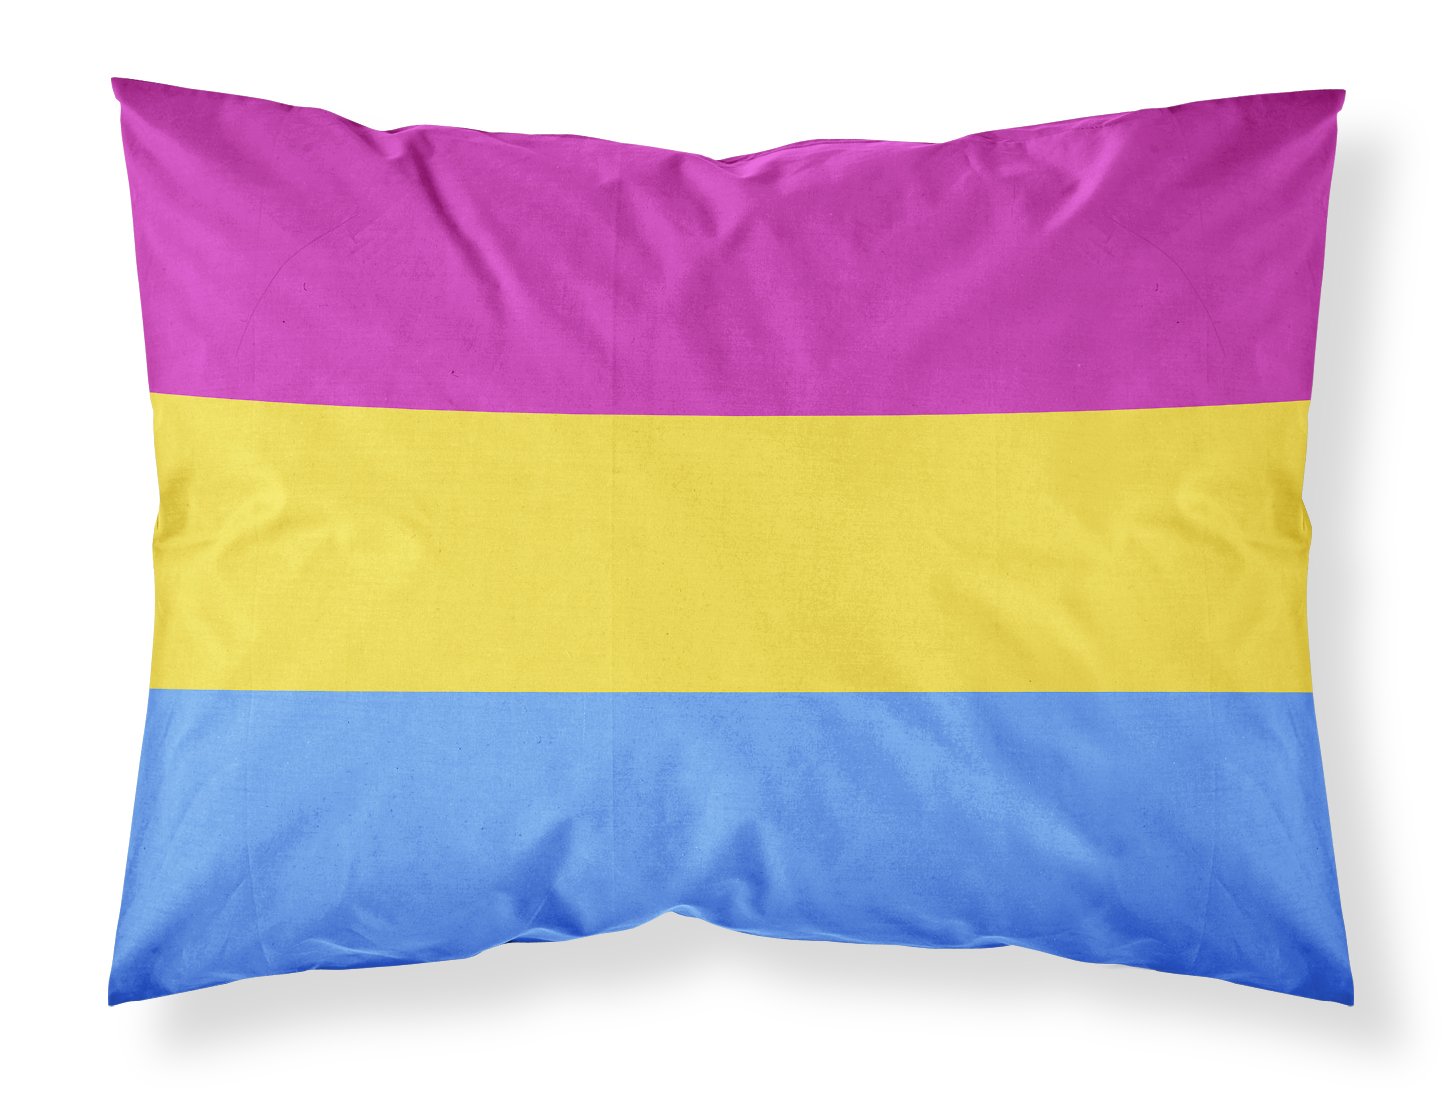 Buy this Pansexual Pride Fabric Standard Pillowcase